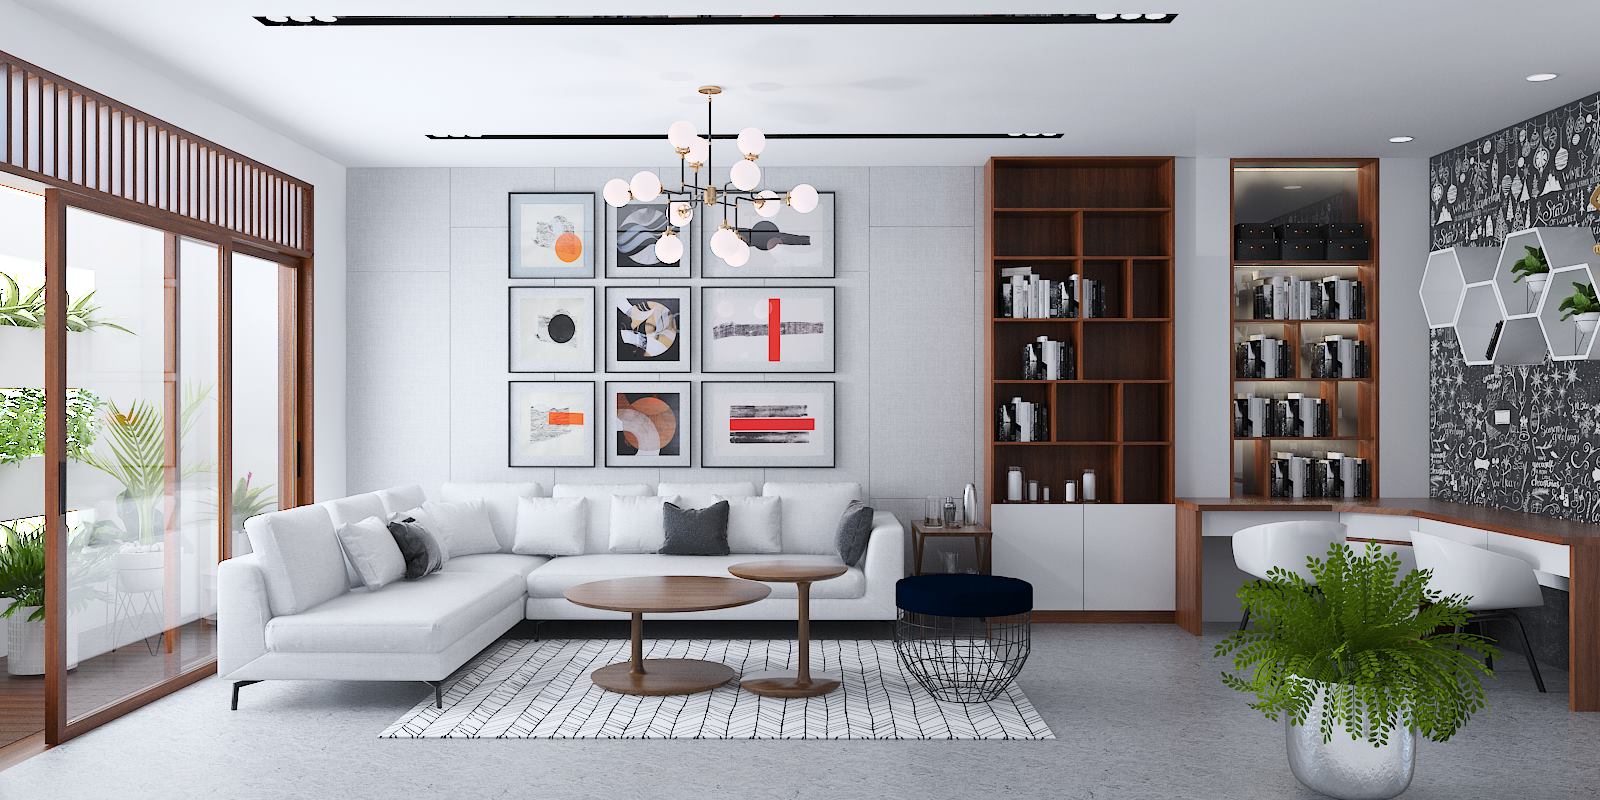 Free Sketchup 3d model Modern Living Room#06 - Architecture Design